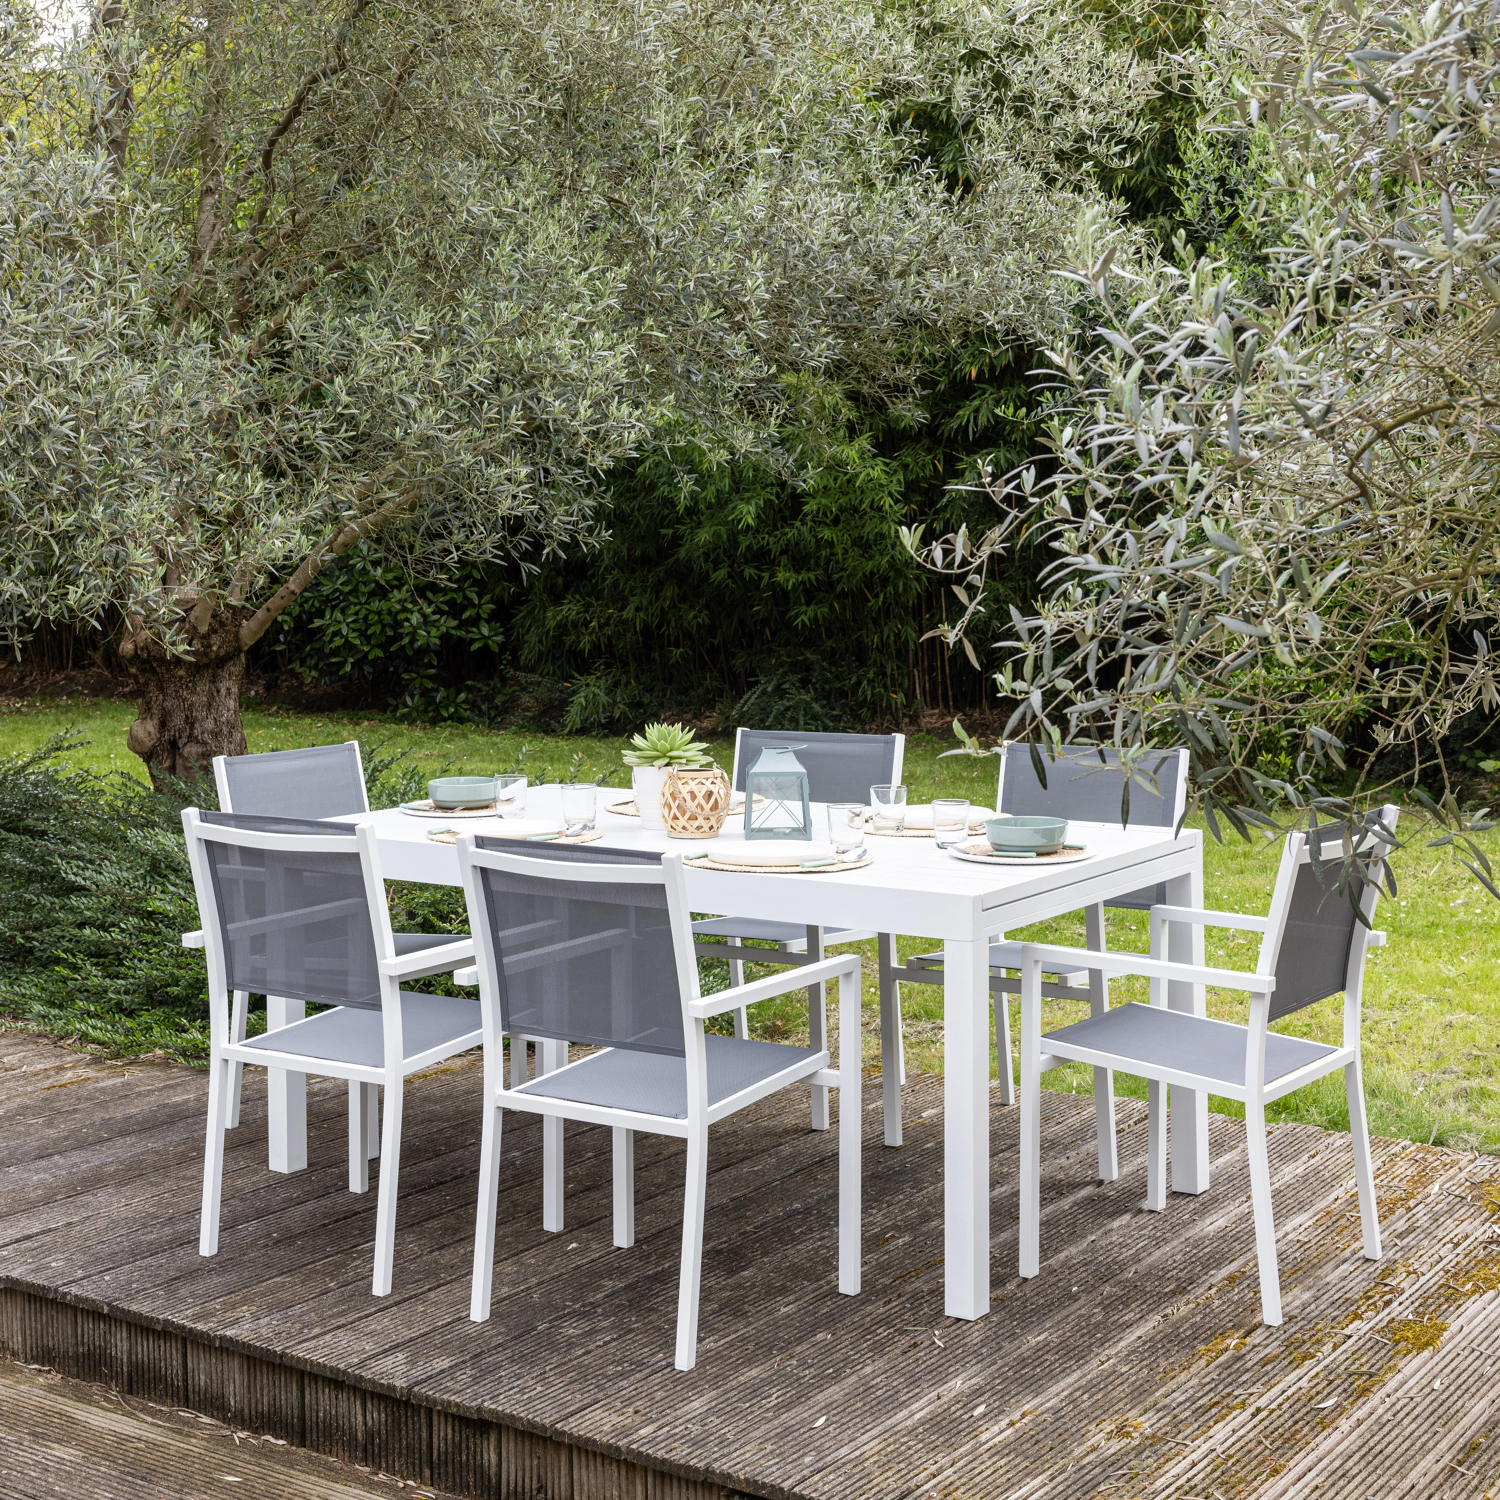 Gartenmöbel VENEZIA ausziehbar 180/300 aus grauem Textilene 10 Sitzplätze - Weißaluminium